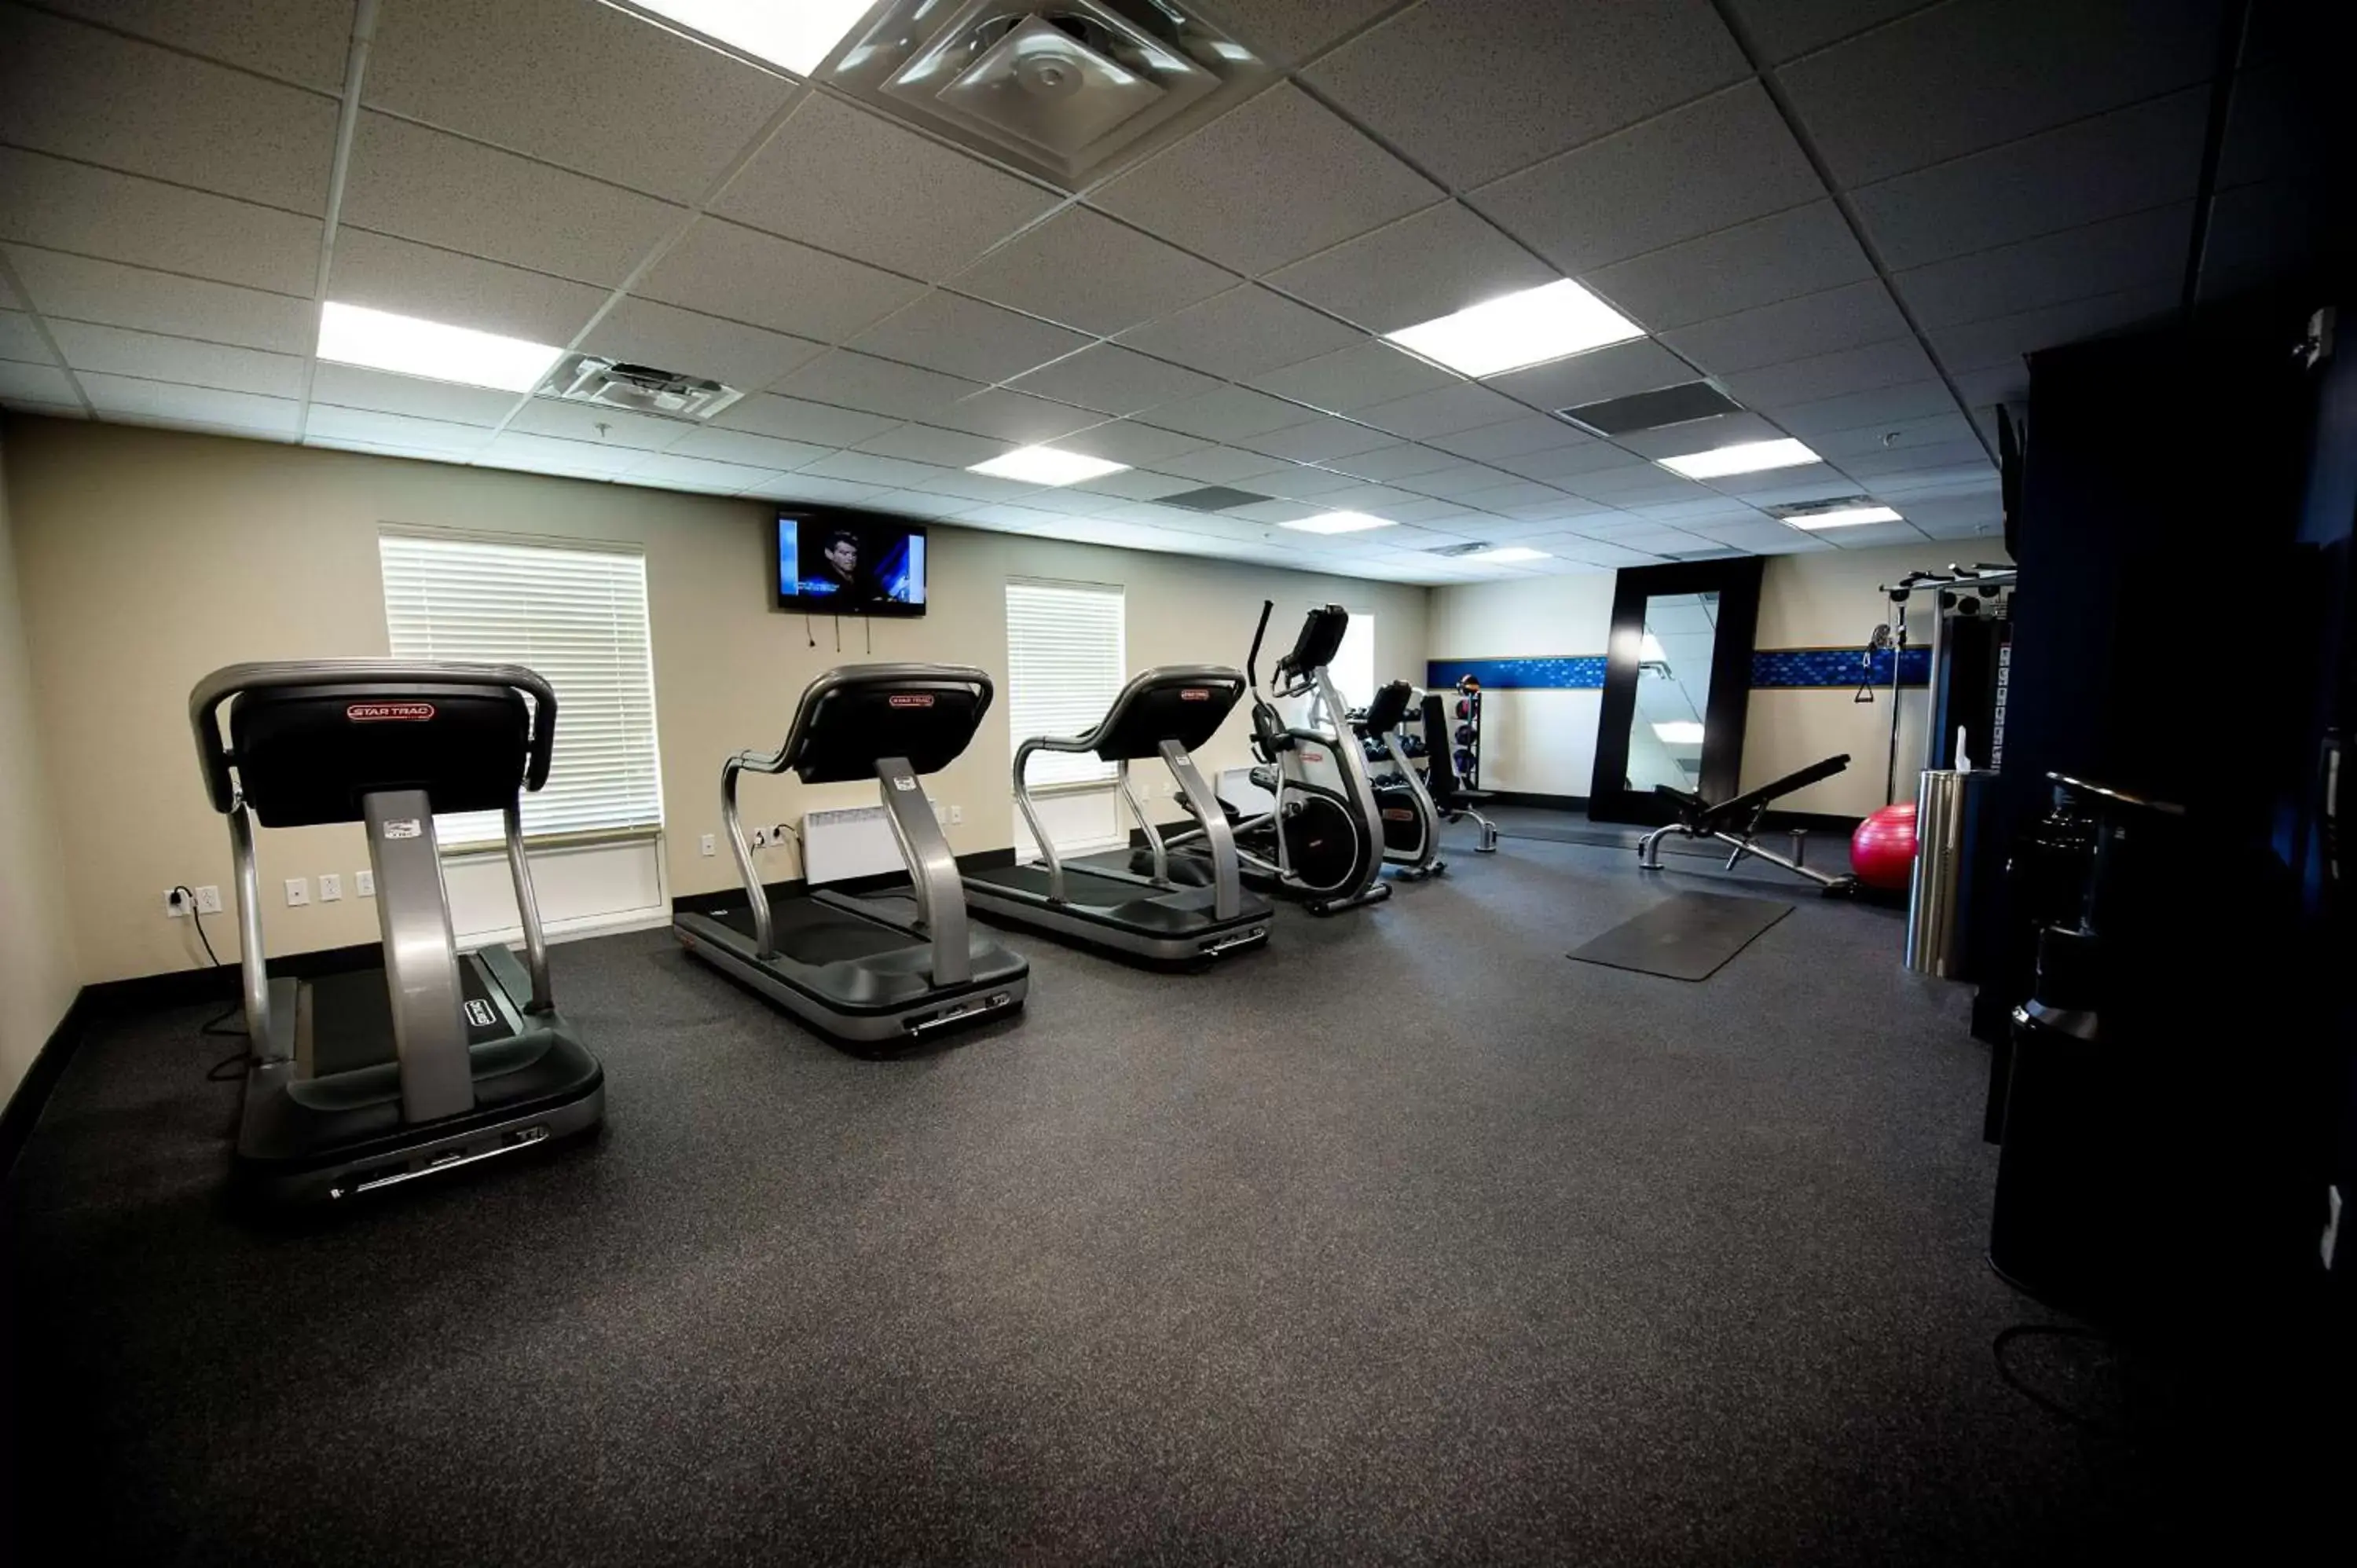 Fitness centre/facilities, Fitness Center/Facilities in Hampton Inn & Suites Truro, NS